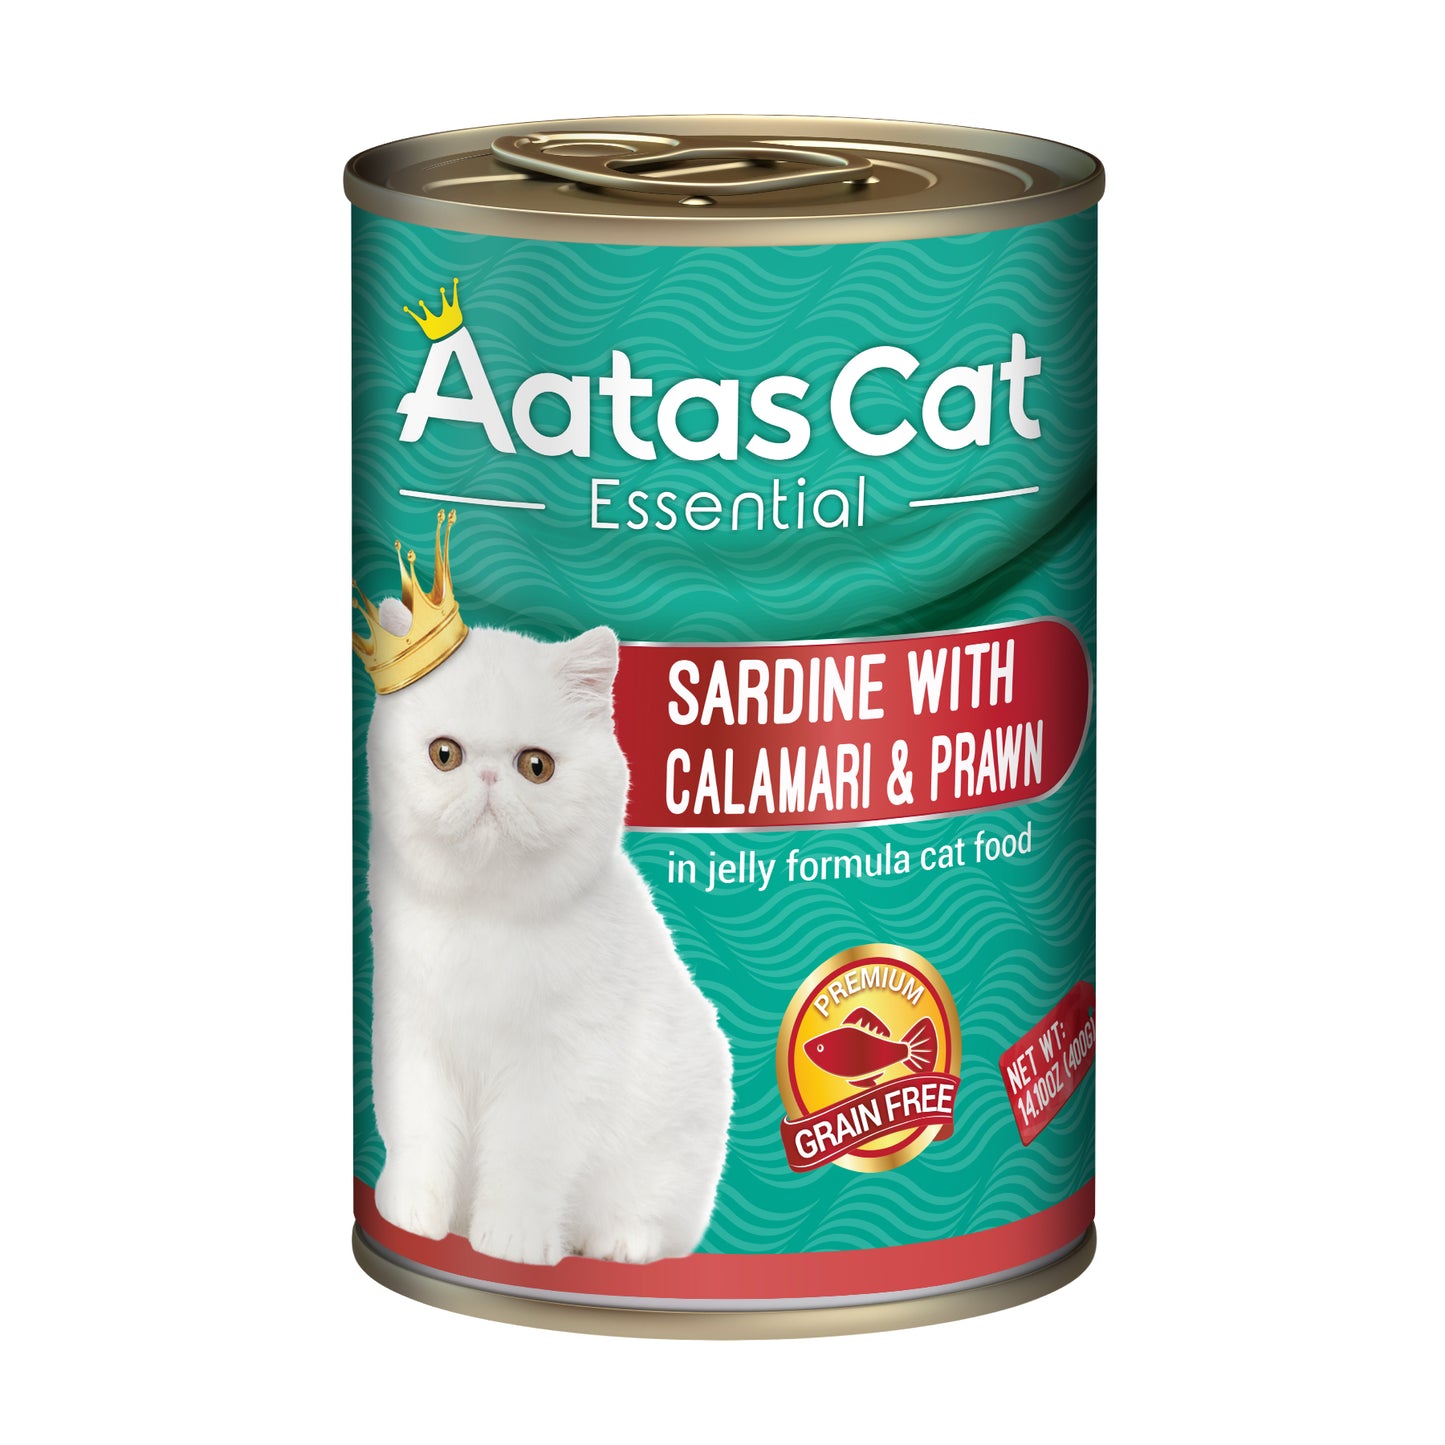 Aatas Cat Essential Sardine with Calamari and Prawn in Jelly Cat Food 400g